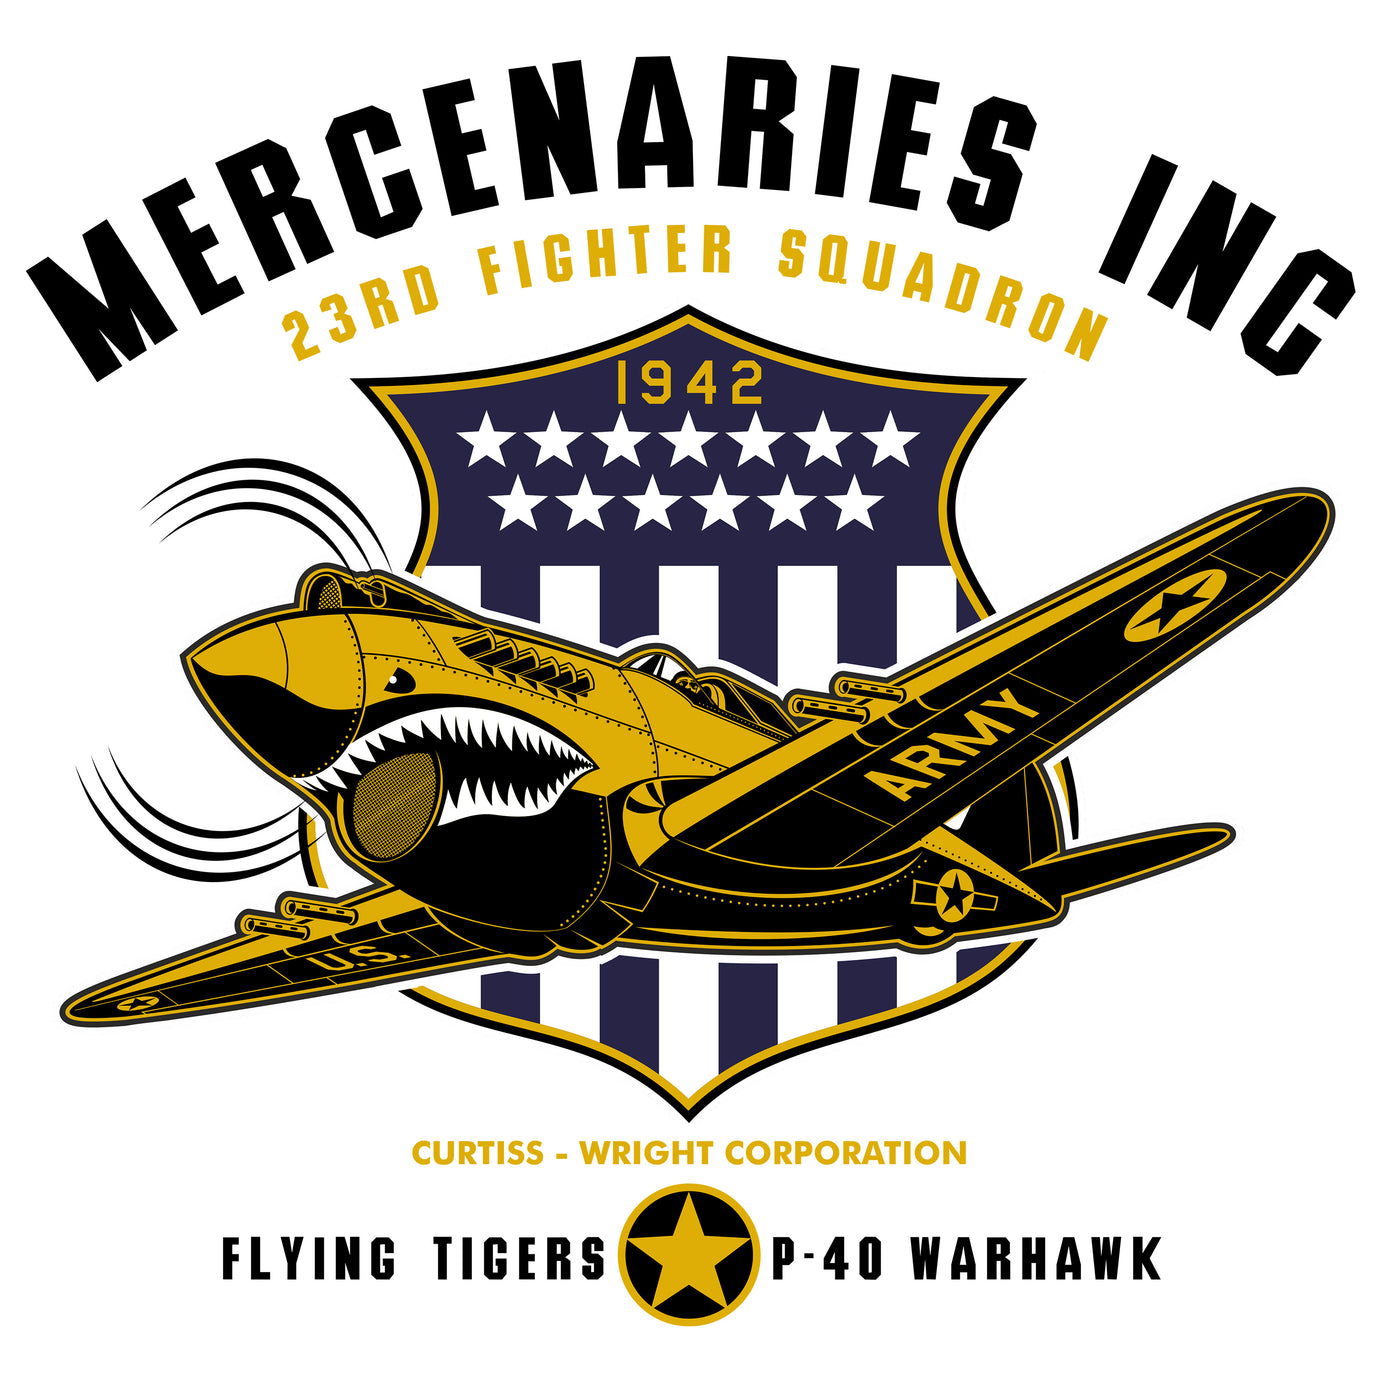 Mercenaries Inc. - NEW - Fem